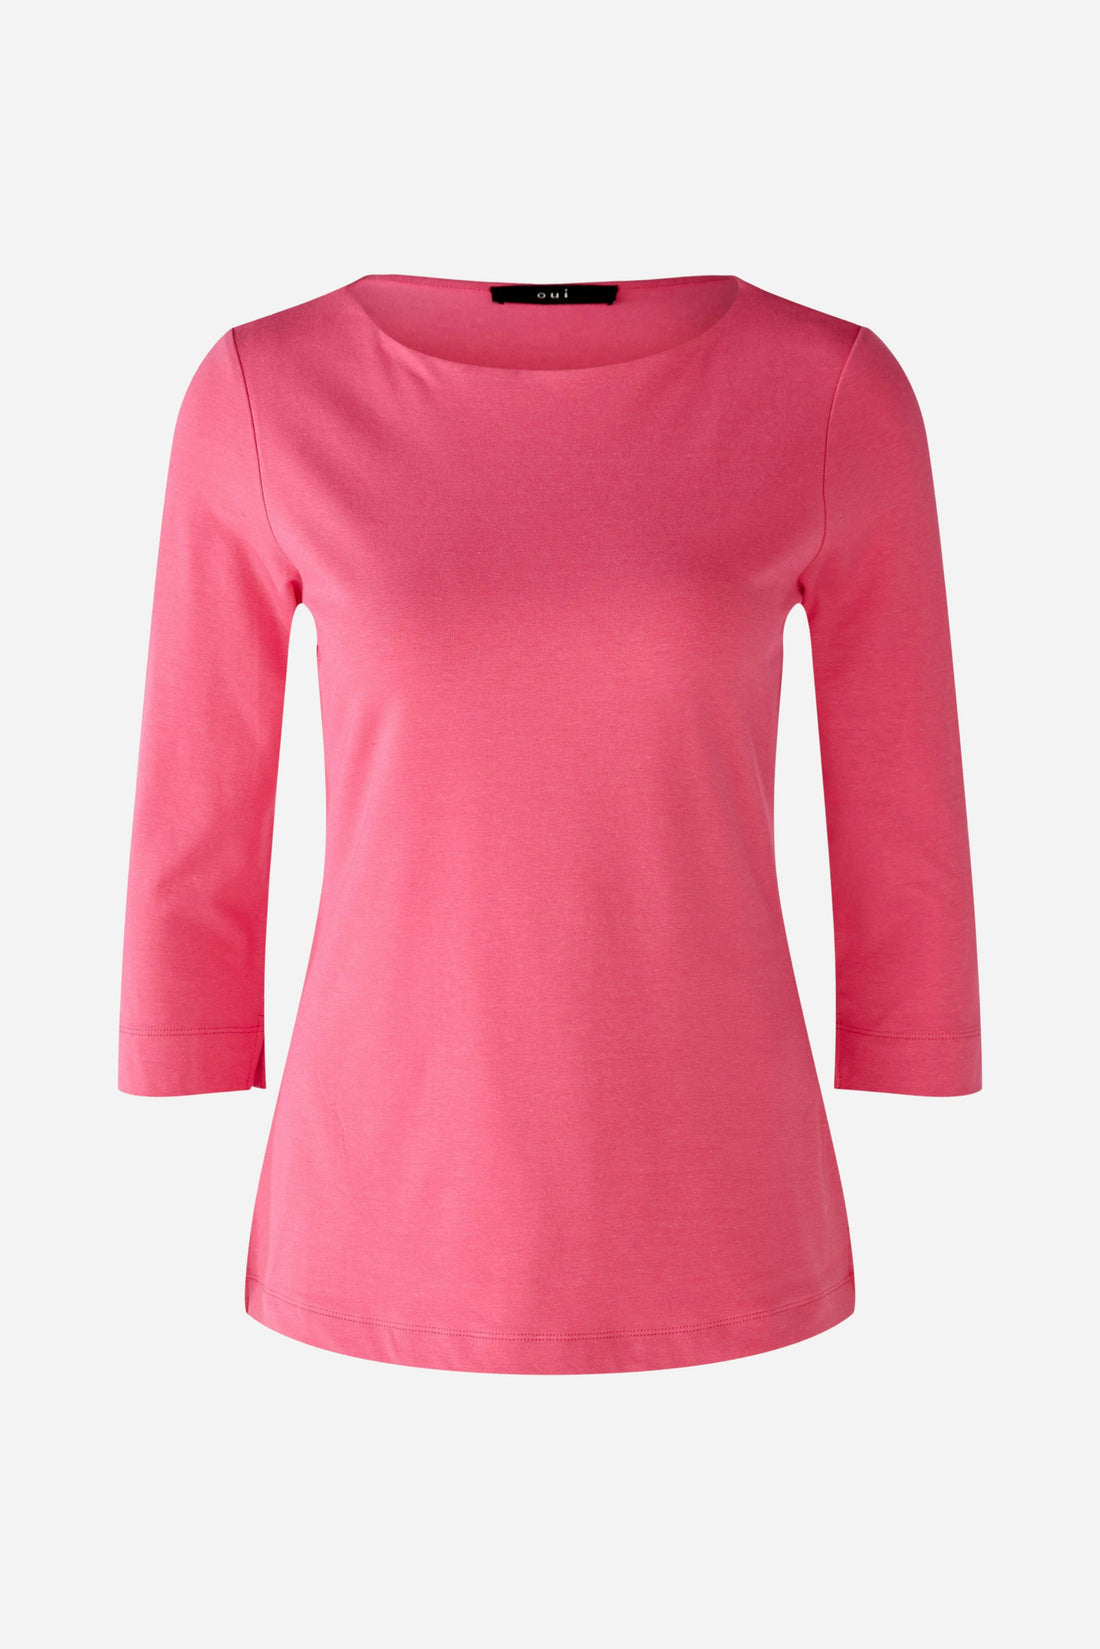 T-Shirt Elastic Cotton-/Modal Quality_79506_3402_01